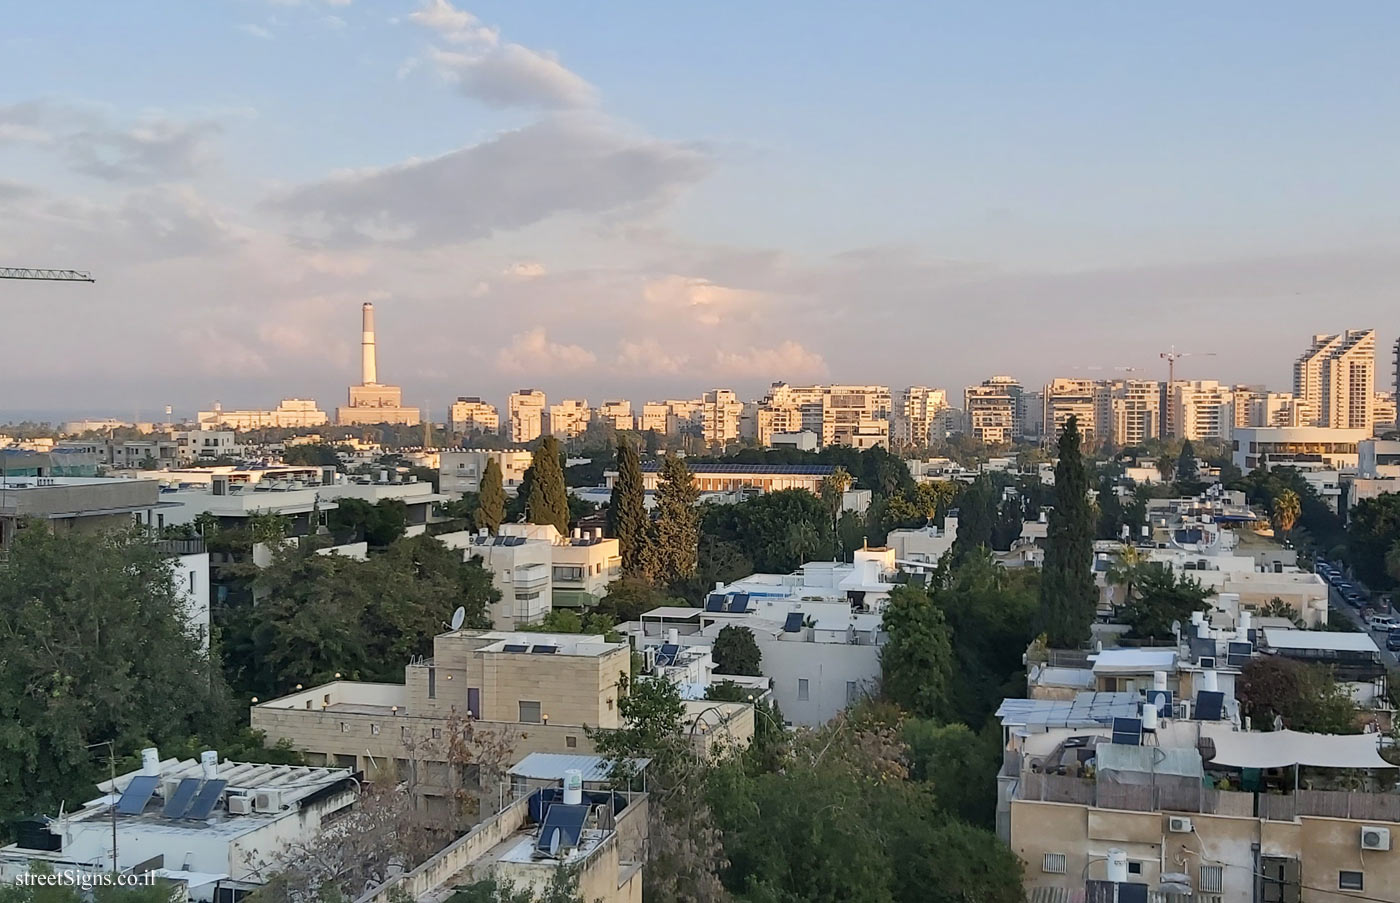 Chimney of the Reading Station on the Tel Aviv, Israel skyline